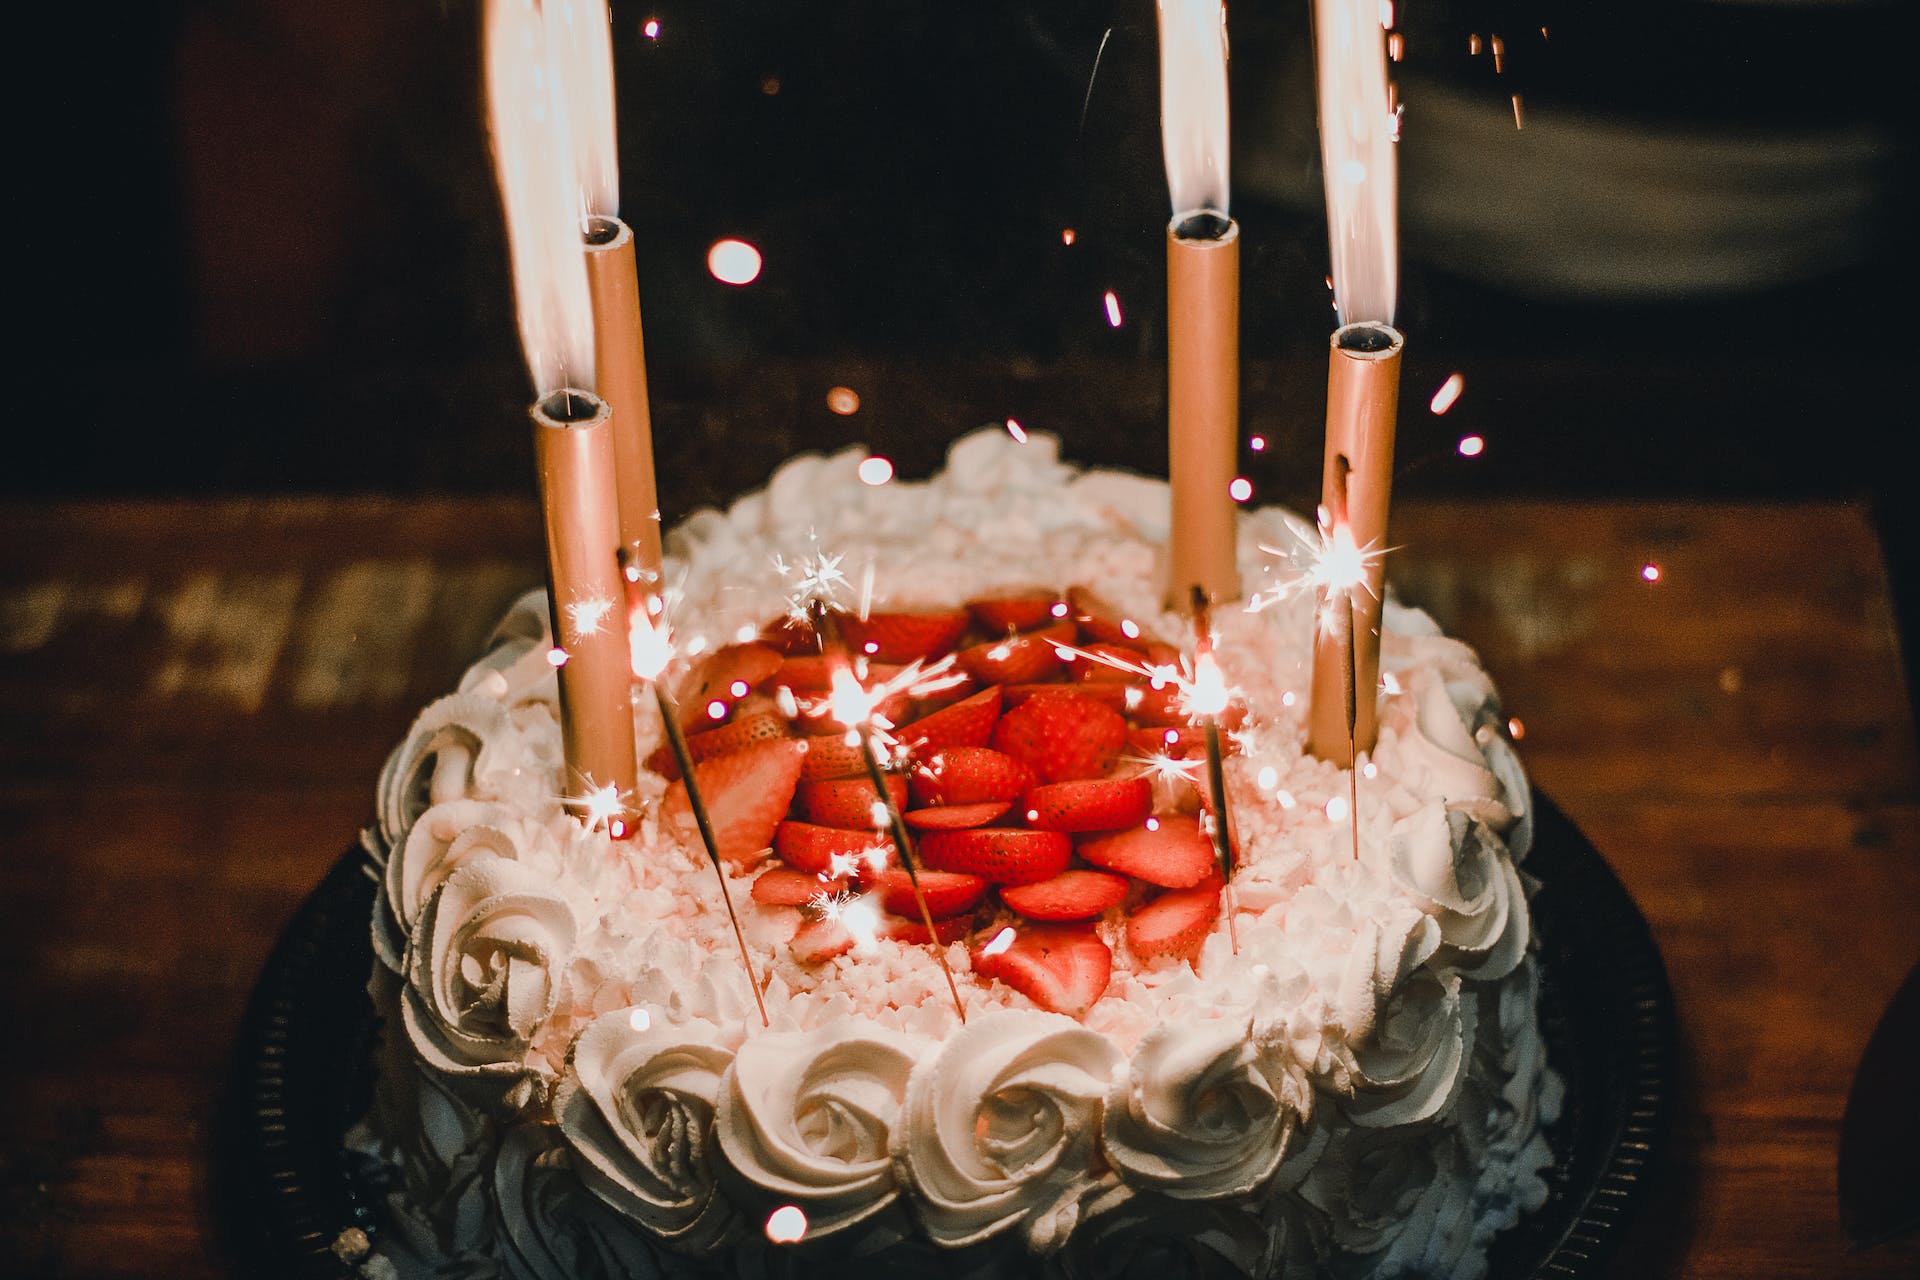 Birthday cake | Source: Pexels